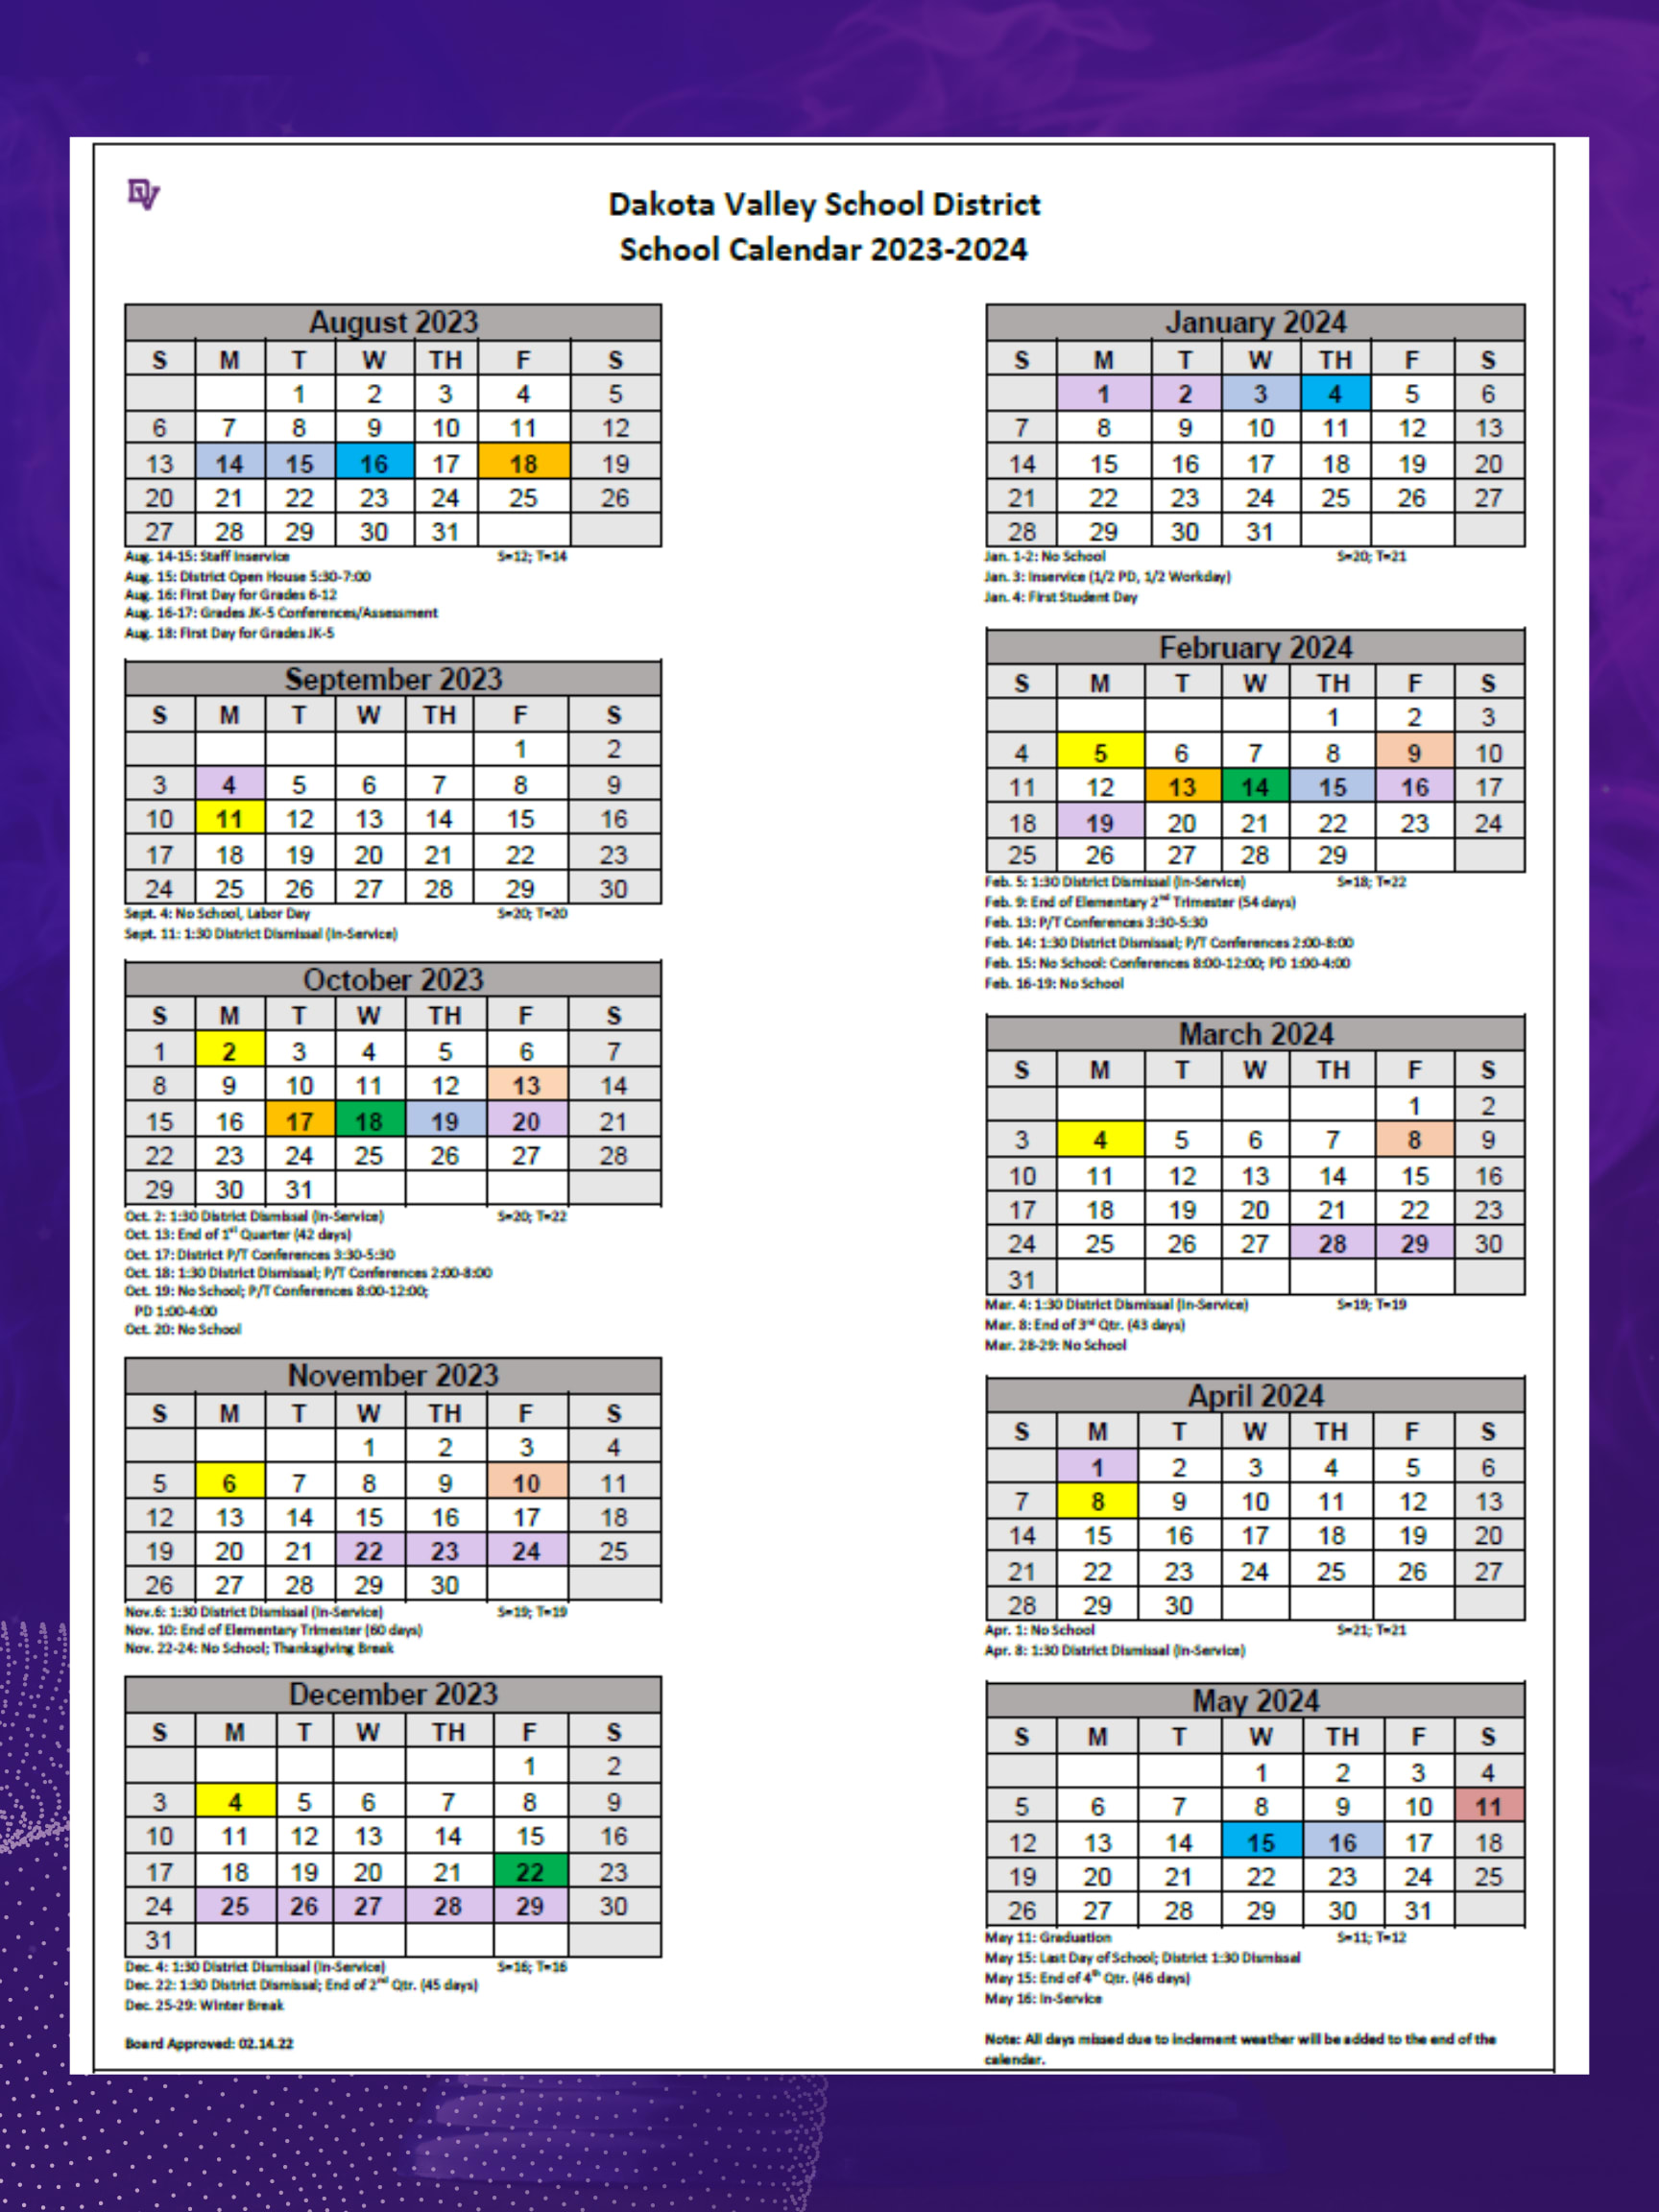 fremont-unified-school-district-calendar-2022-2023-holidays